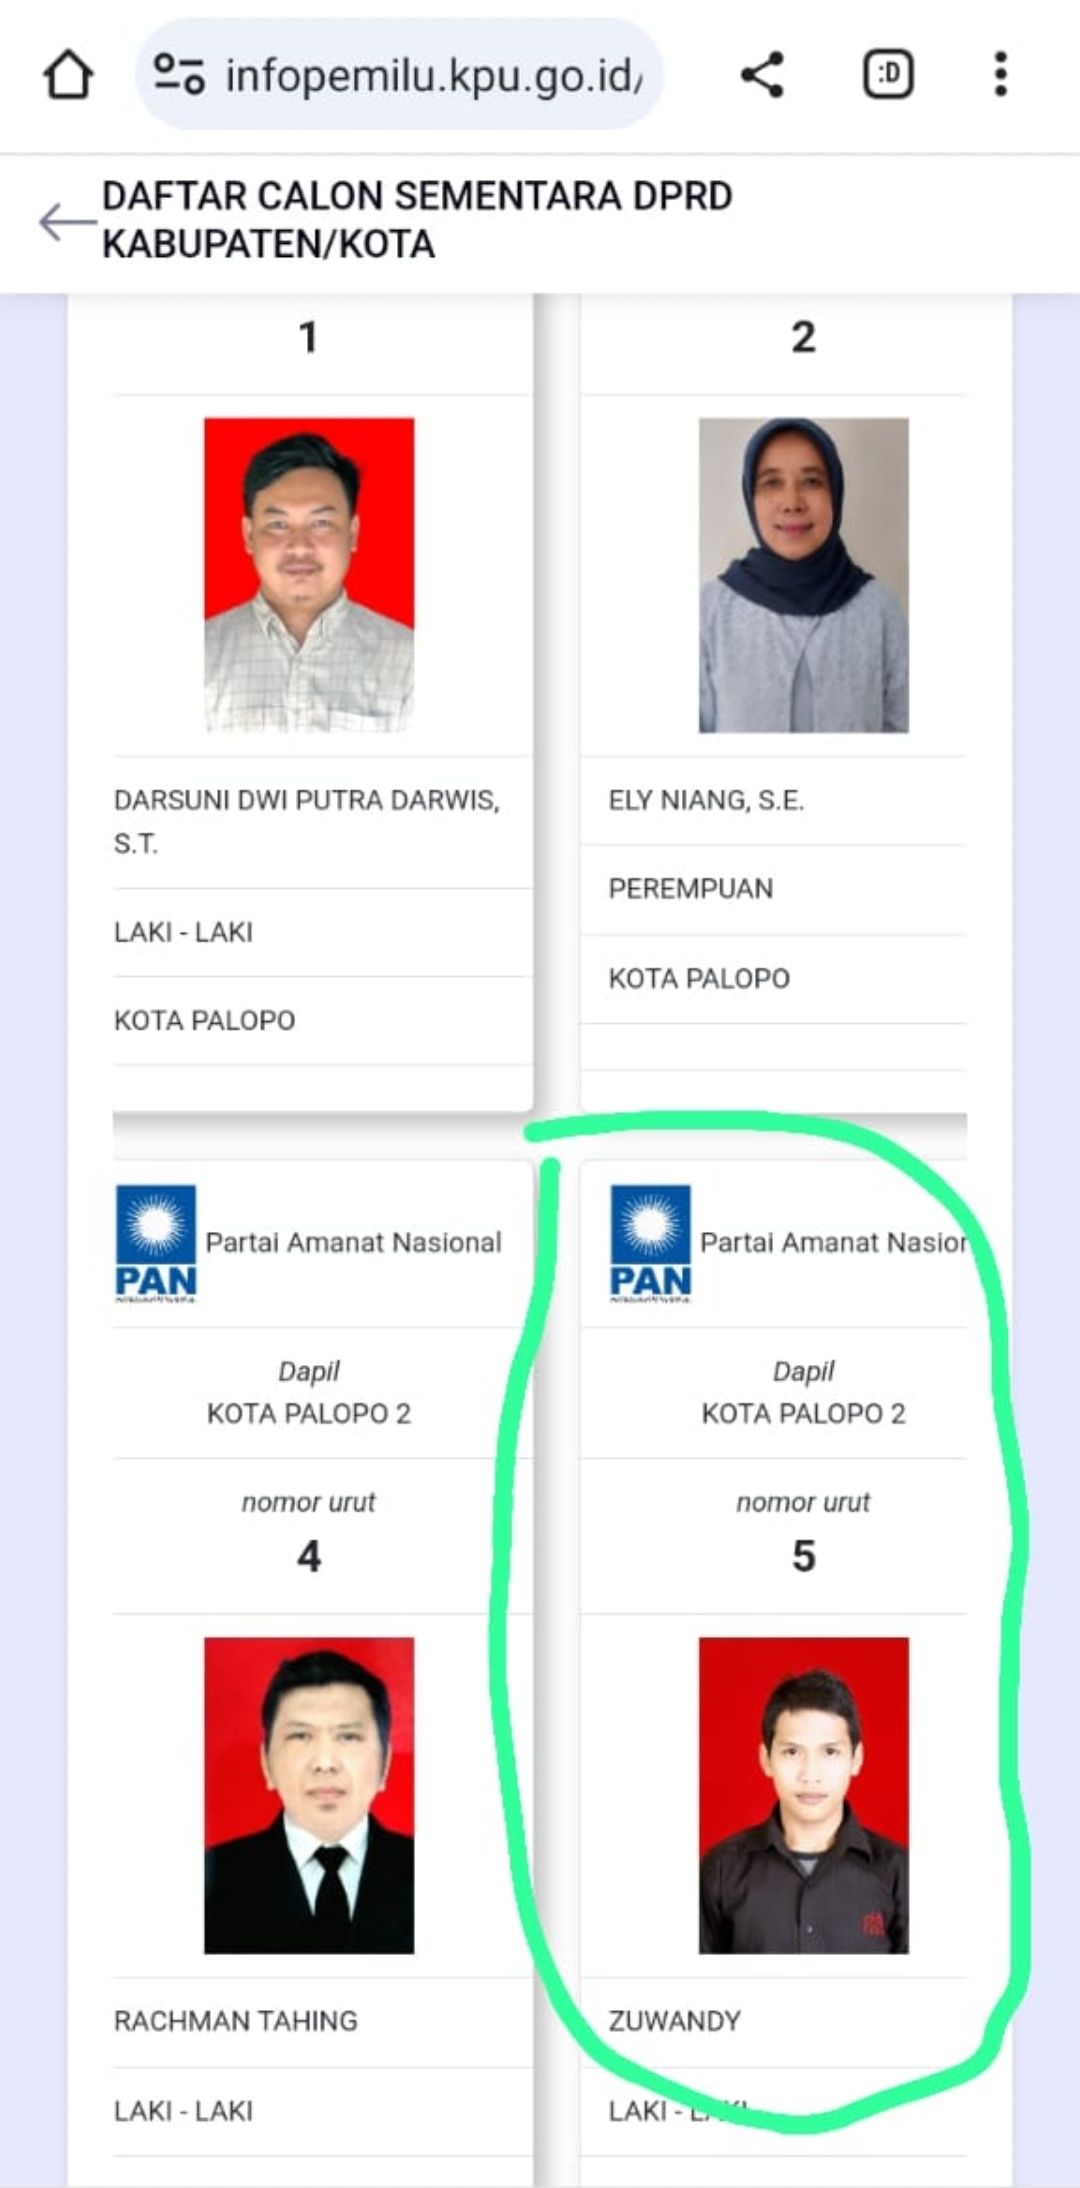 Daftar Calon Sementara (DCS) DPRD Kabupaten / Kota. 